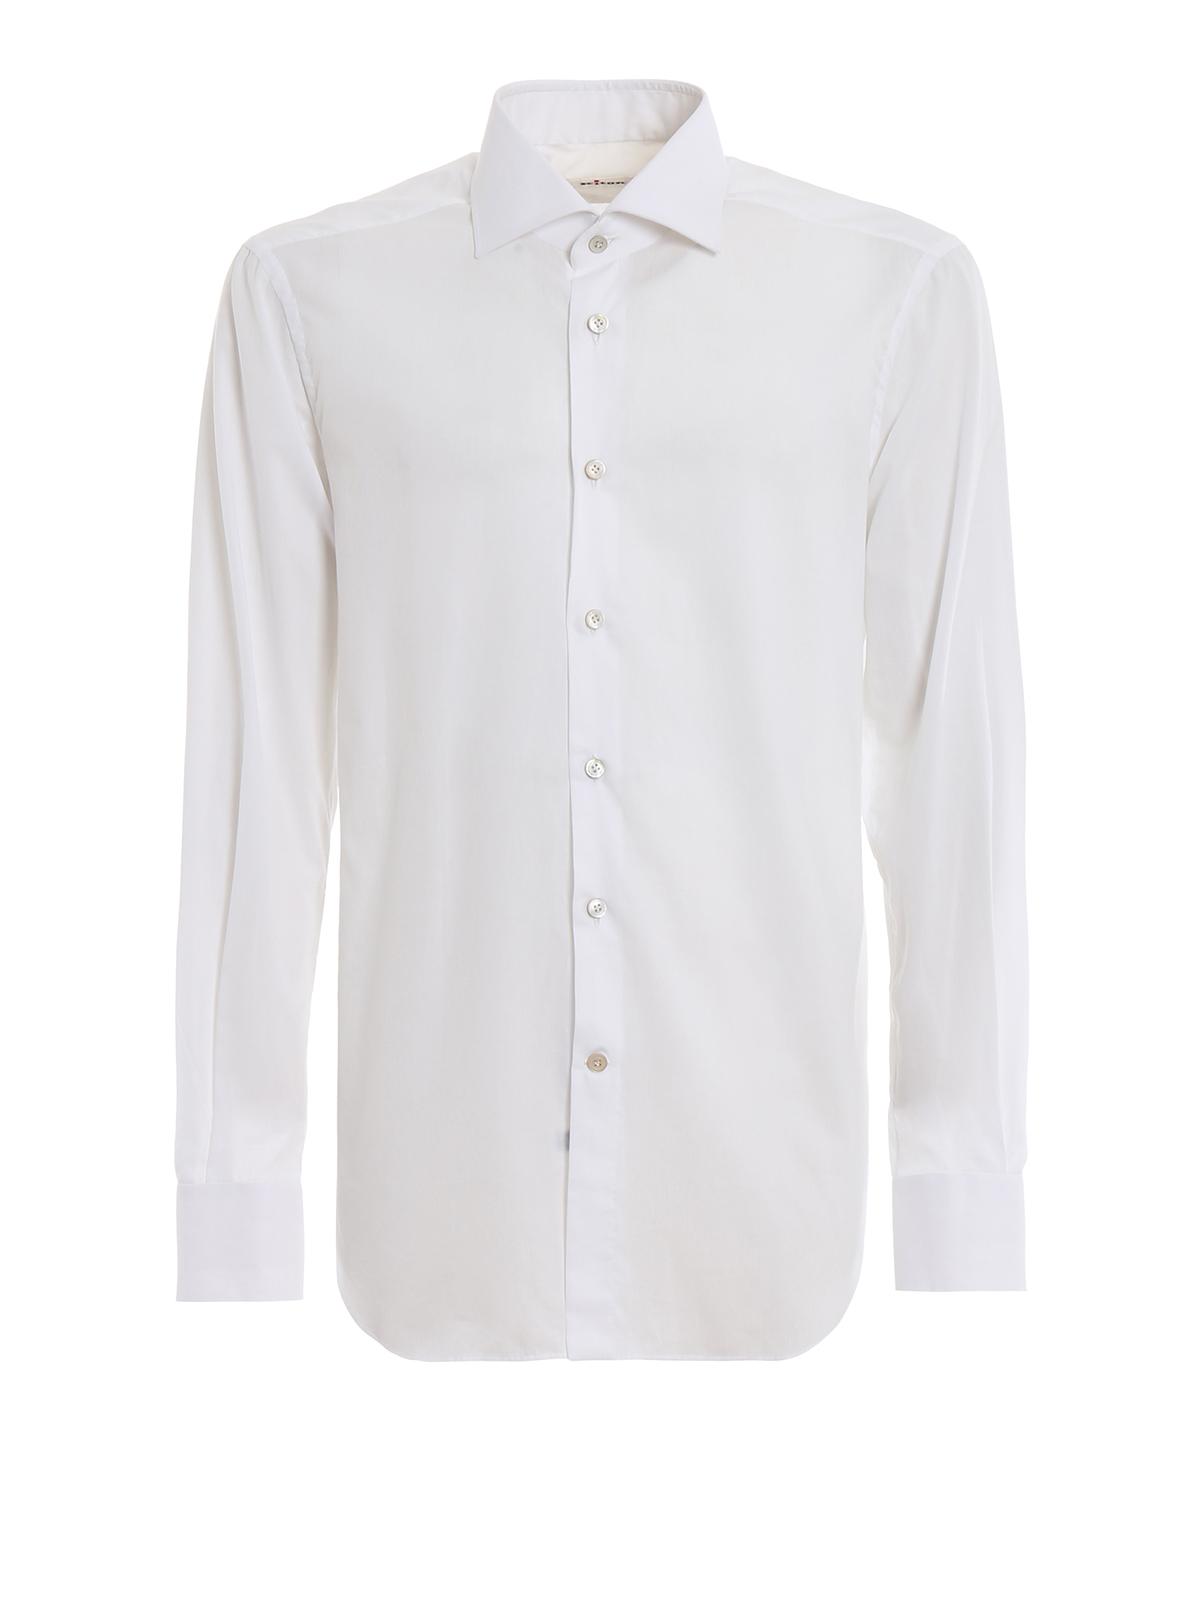 Kiton White Cotton Muslin Shirt for Men - Lyst